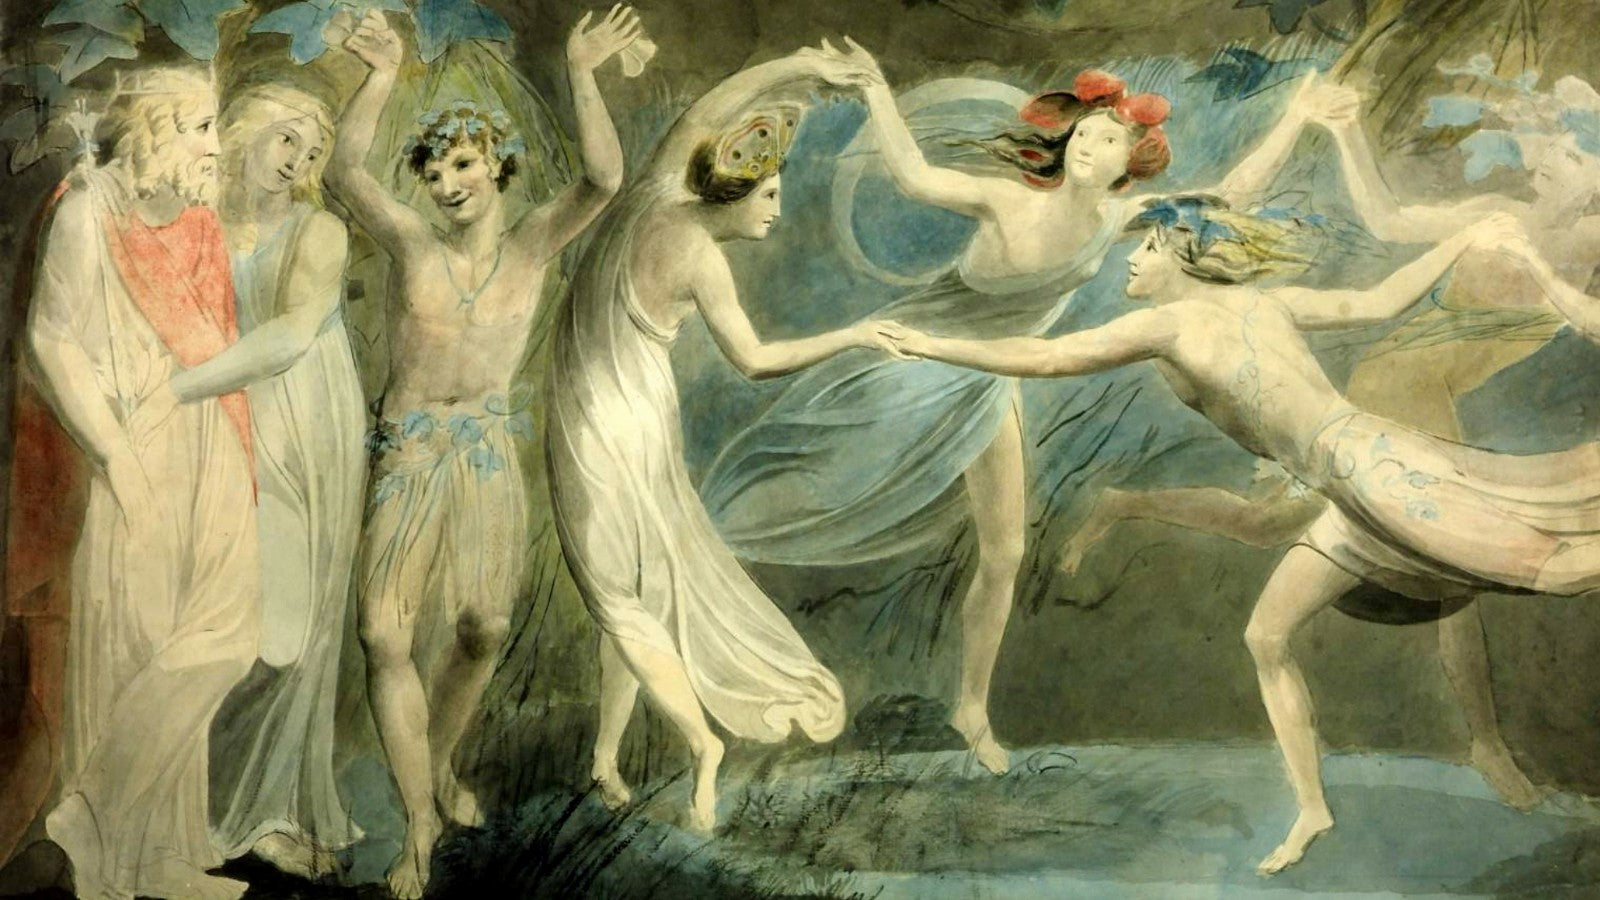 Oberon, Titania and Puck with Fairies Dancing - William Blake (1786)